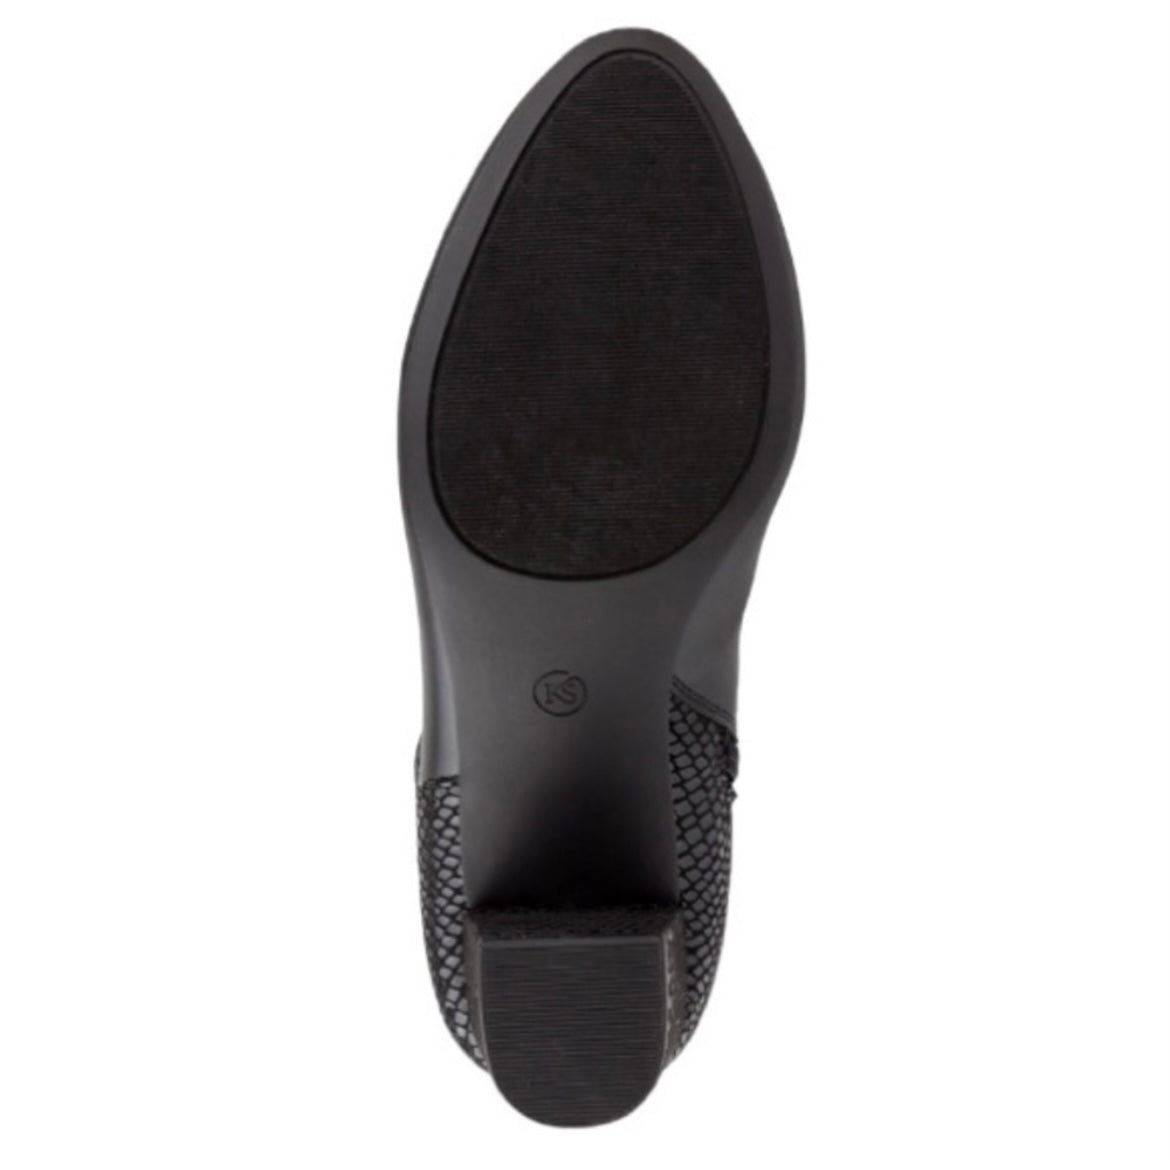 ISABELL Black Almond Toe Block Heels Zip Up Size 6.5 M Women's Boots